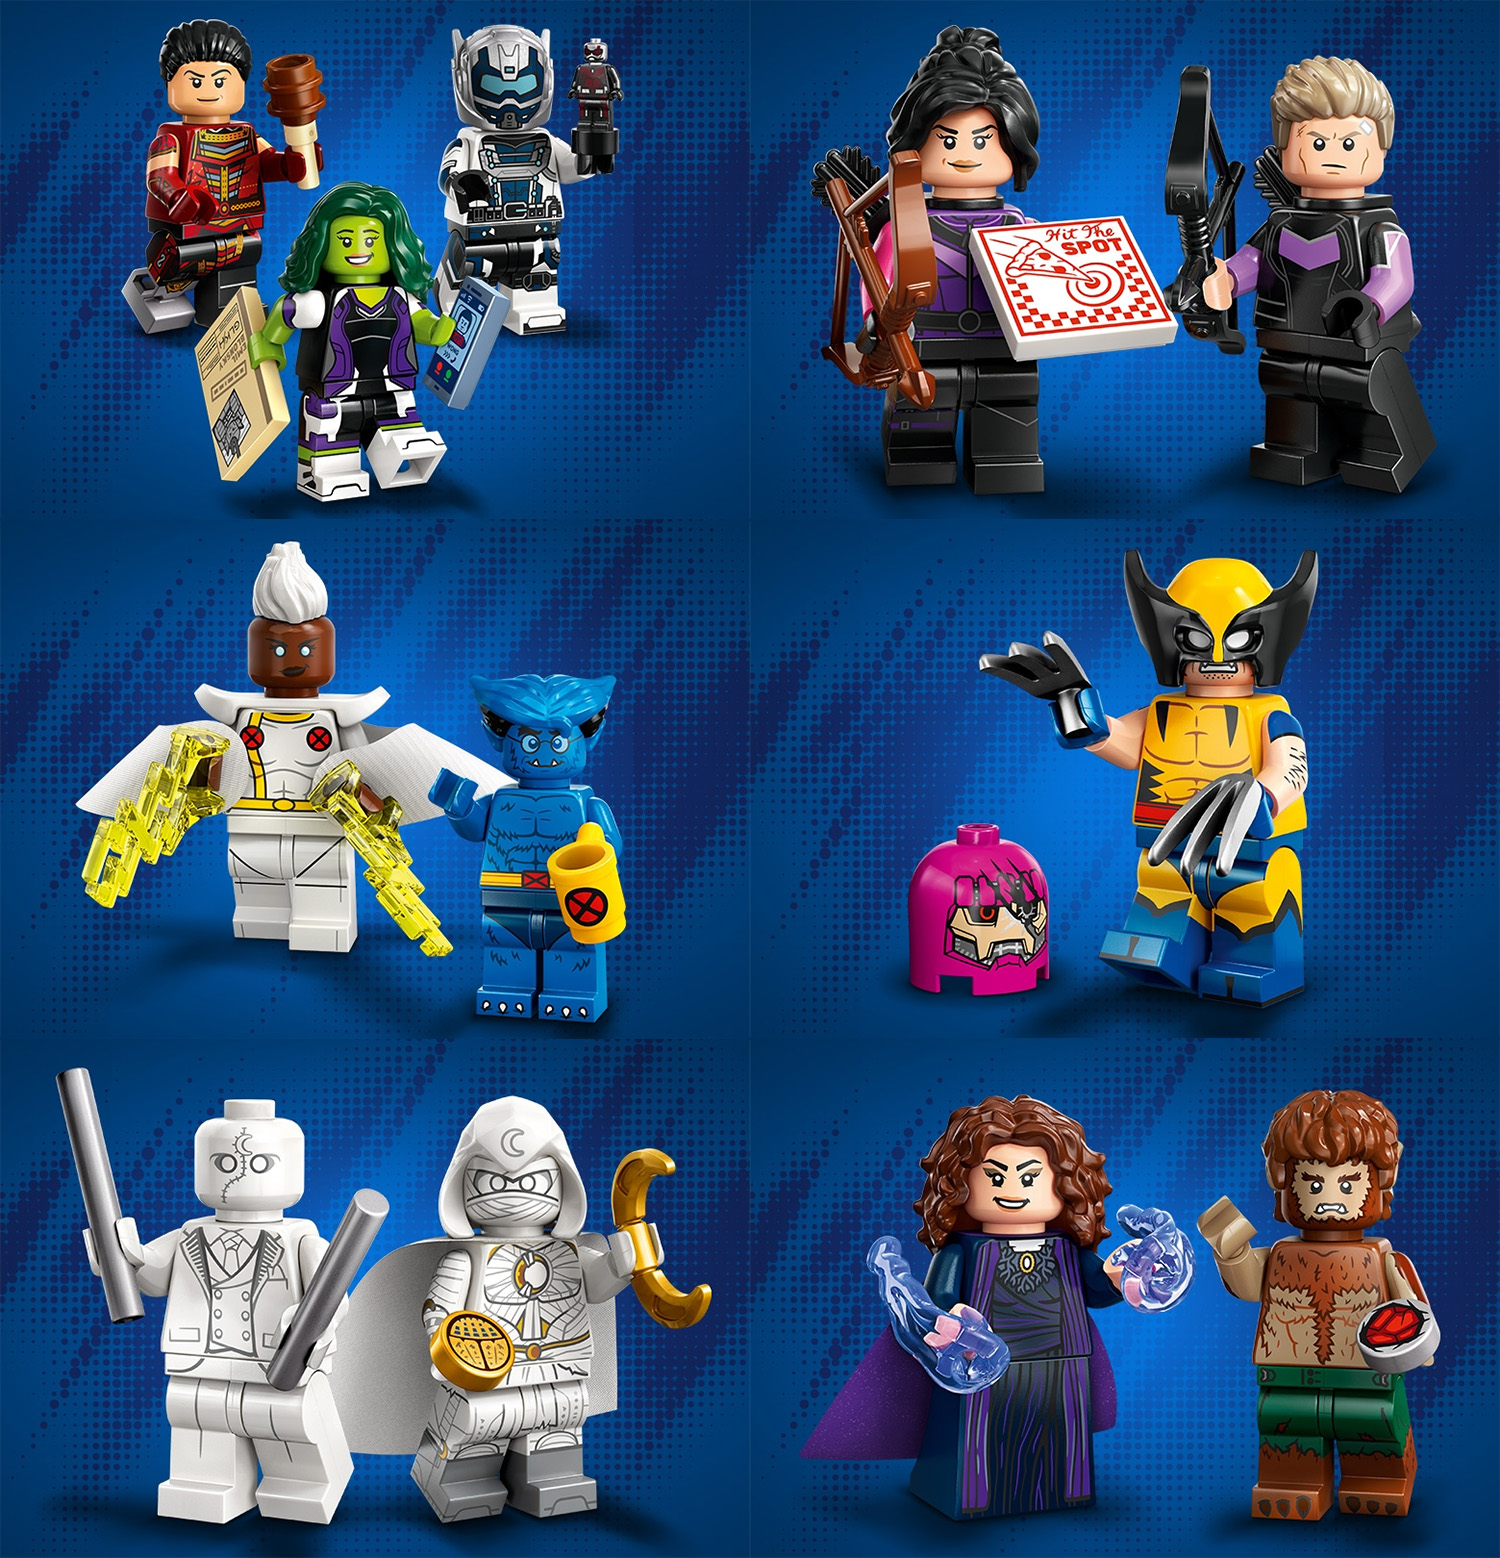 LEGO 71039 Marvel Studios Minifigures Series 2 Complete Set of 12